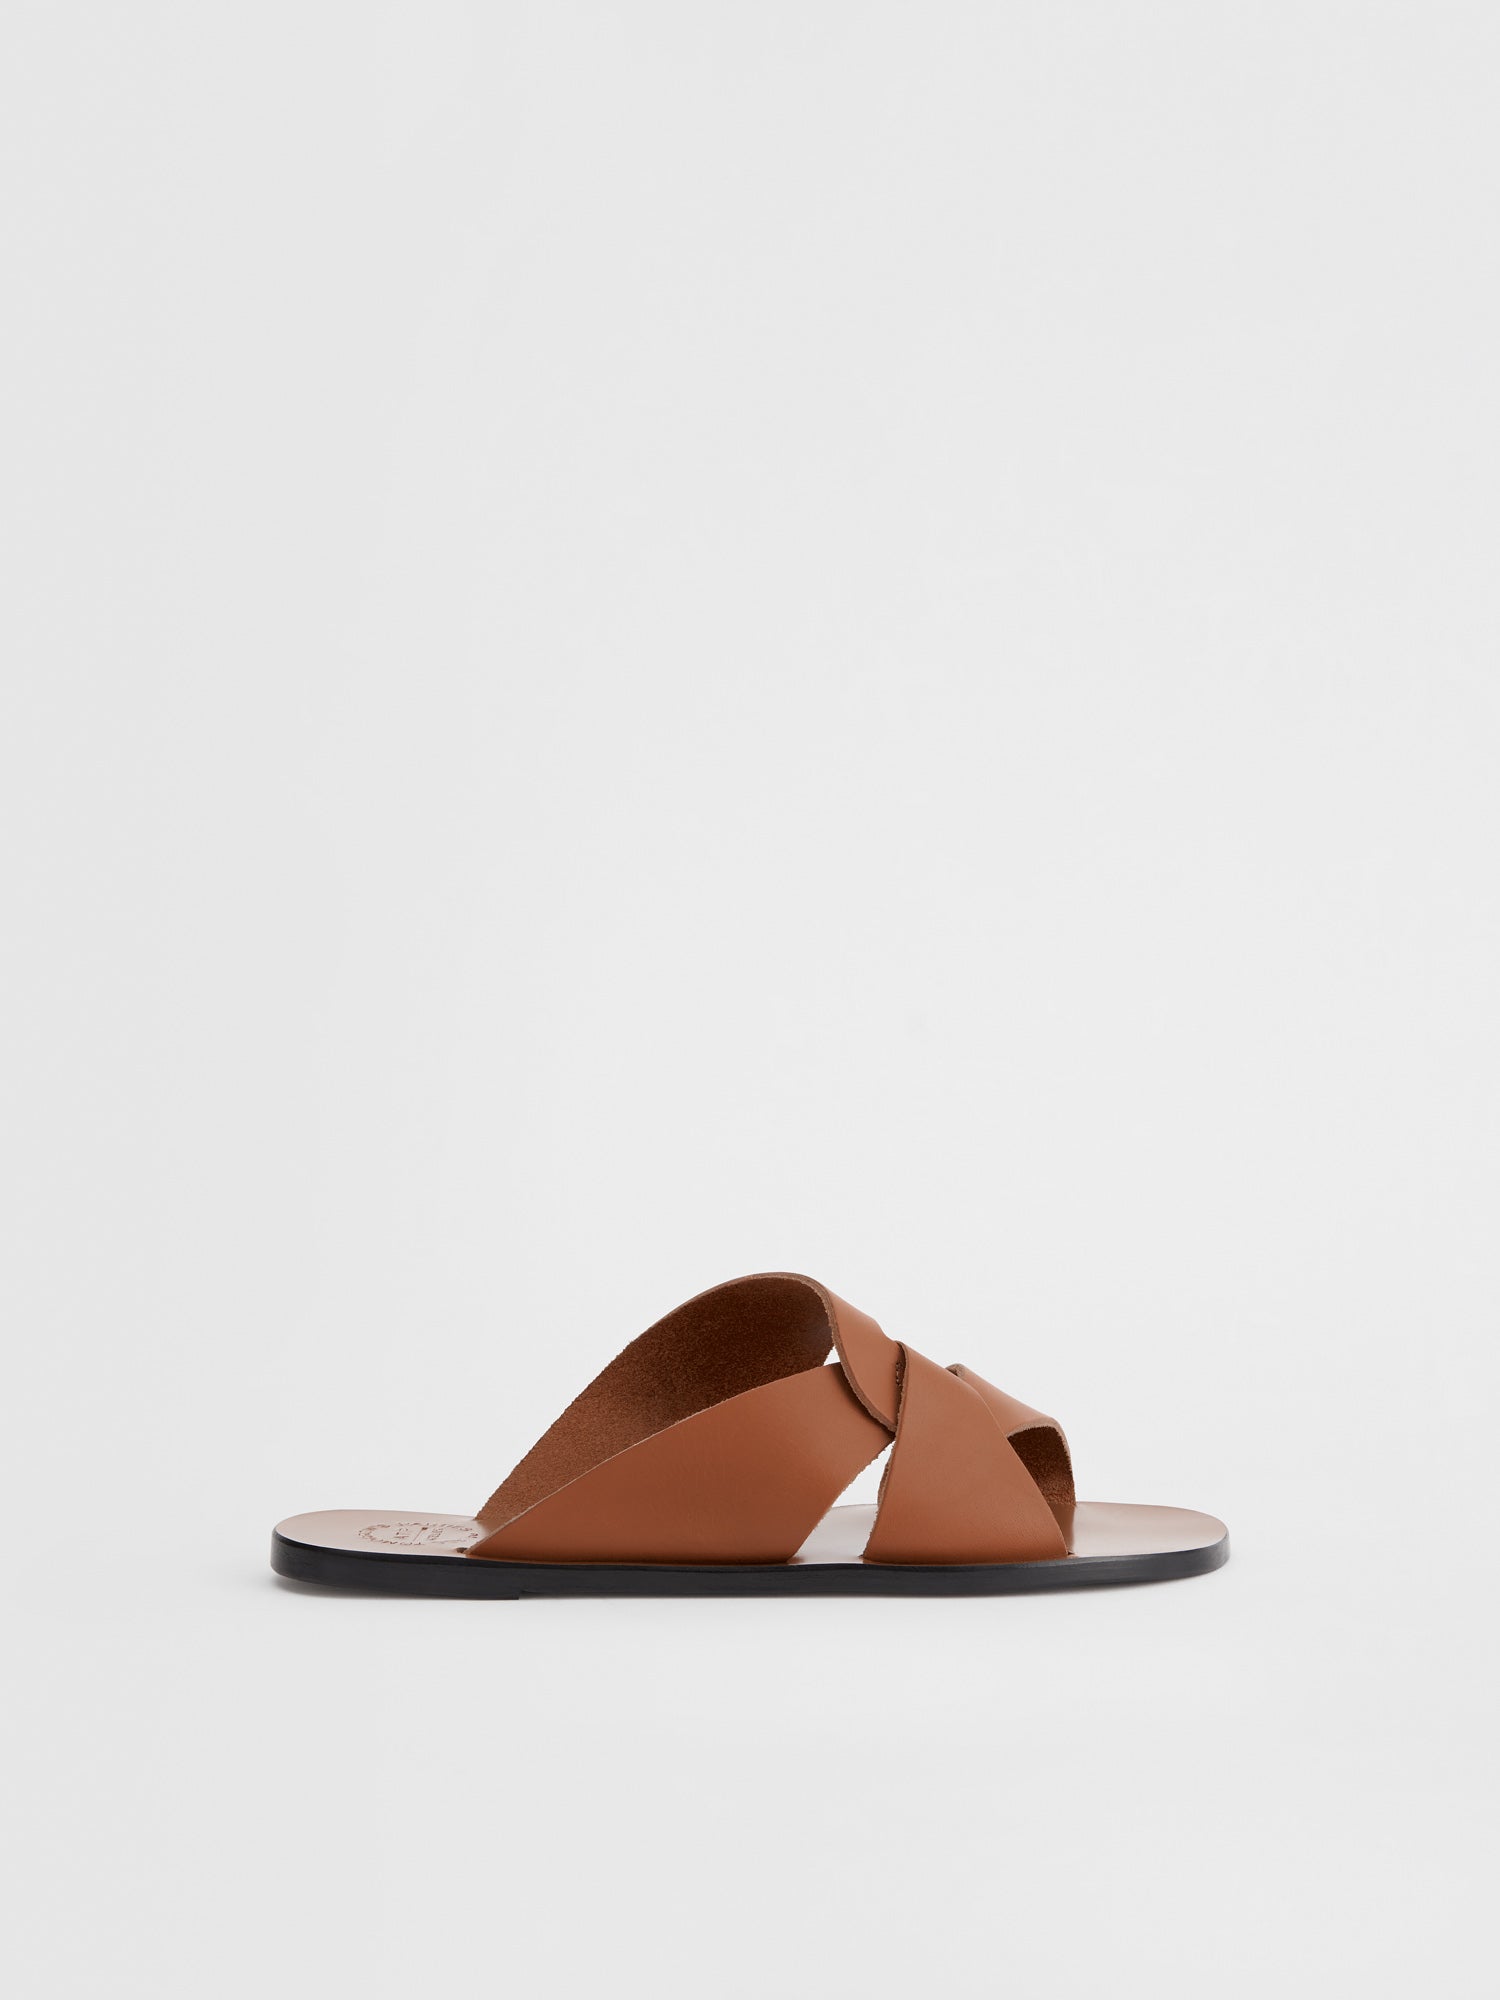 Allai Brandy Leather Flat sandals